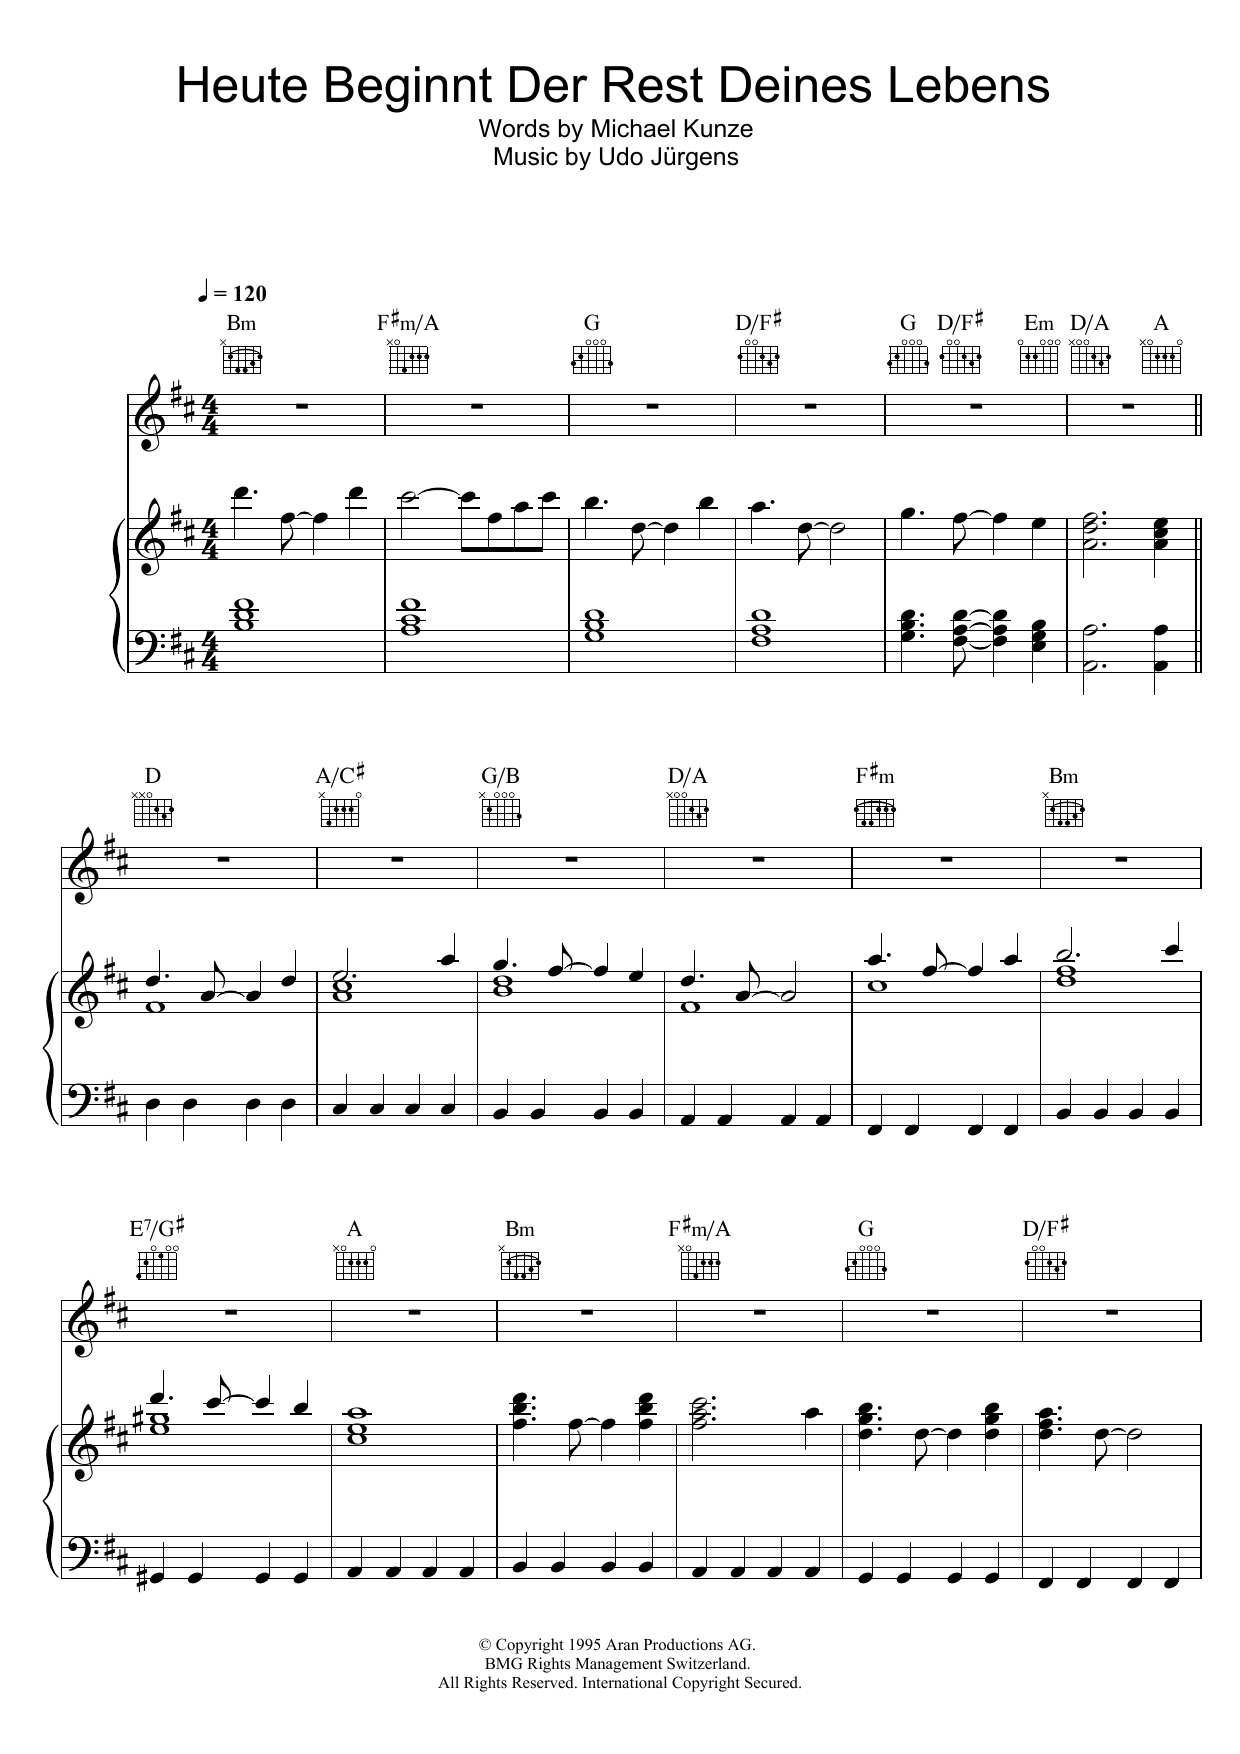 Udo Jurgens Heute Beginnt Der Rest Deines Lebens Sheet Music Notes & Chords for Piano, Vocal & Guitar (Right-Hand Melody) - Download or Print PDF